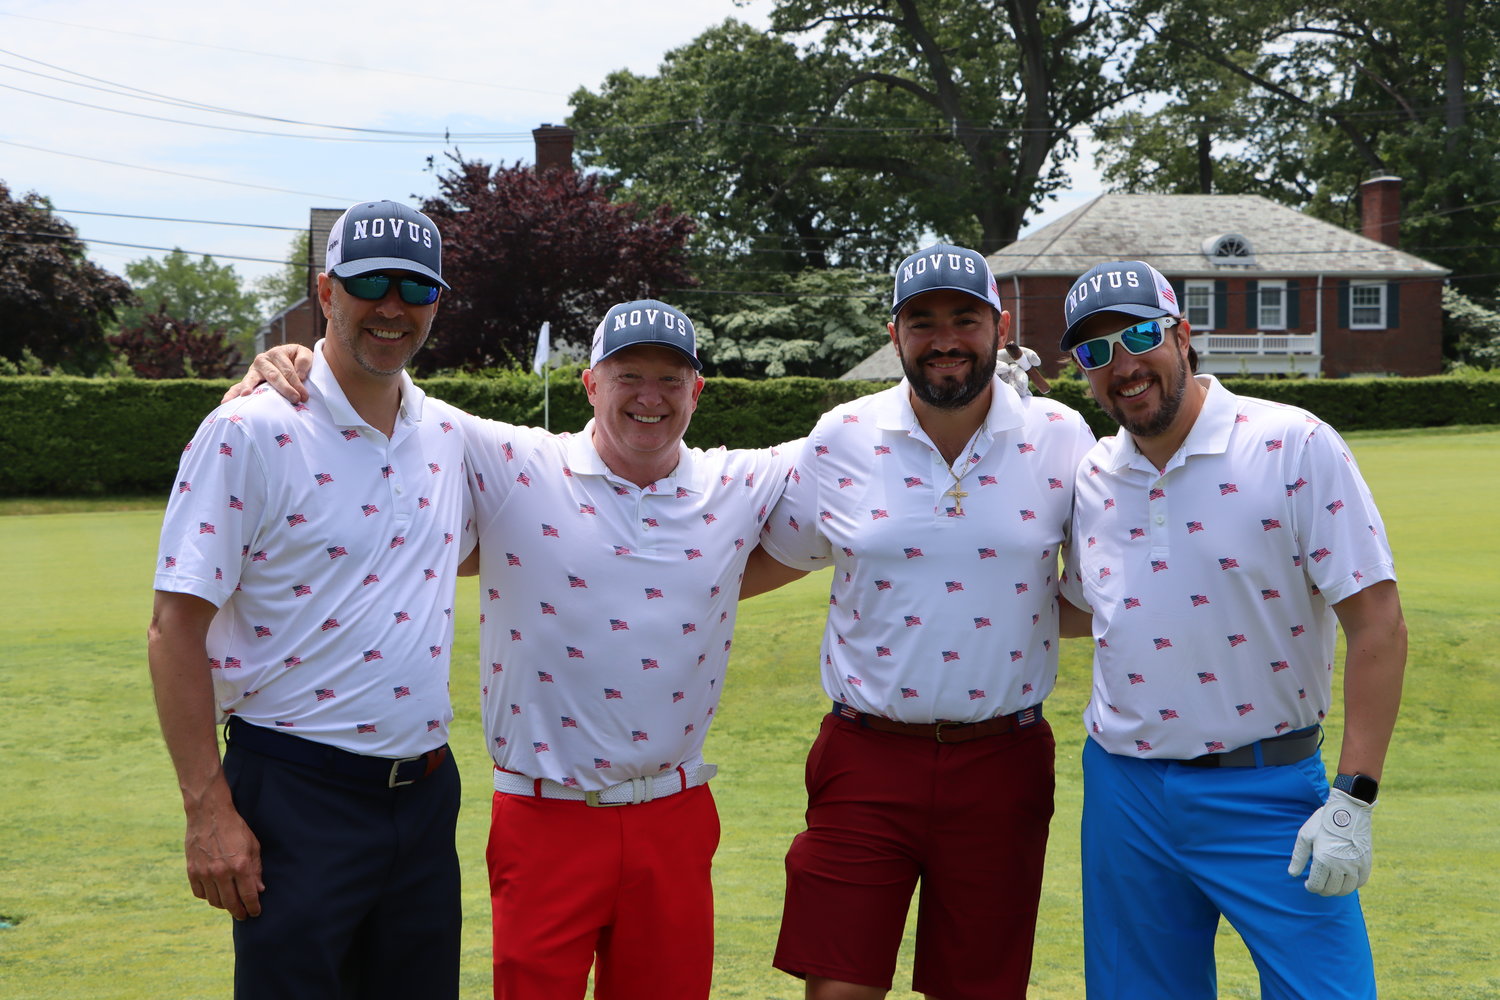 John Congdon, Sean Farley, Charles Massaro, and Brayton Tom got out on the course in matching golf shirts.